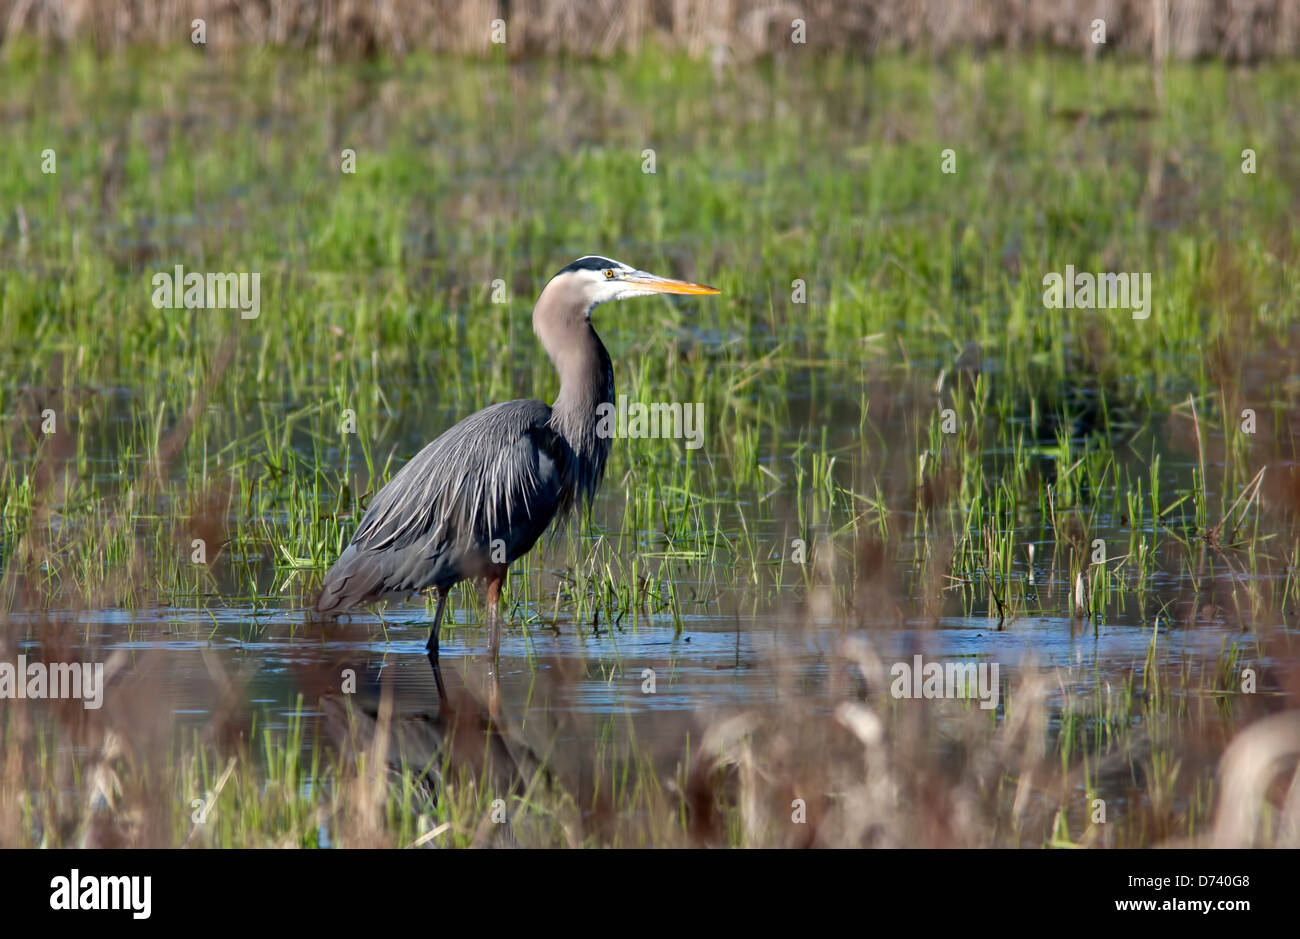 Heron walks through wetlands. Stock Photo